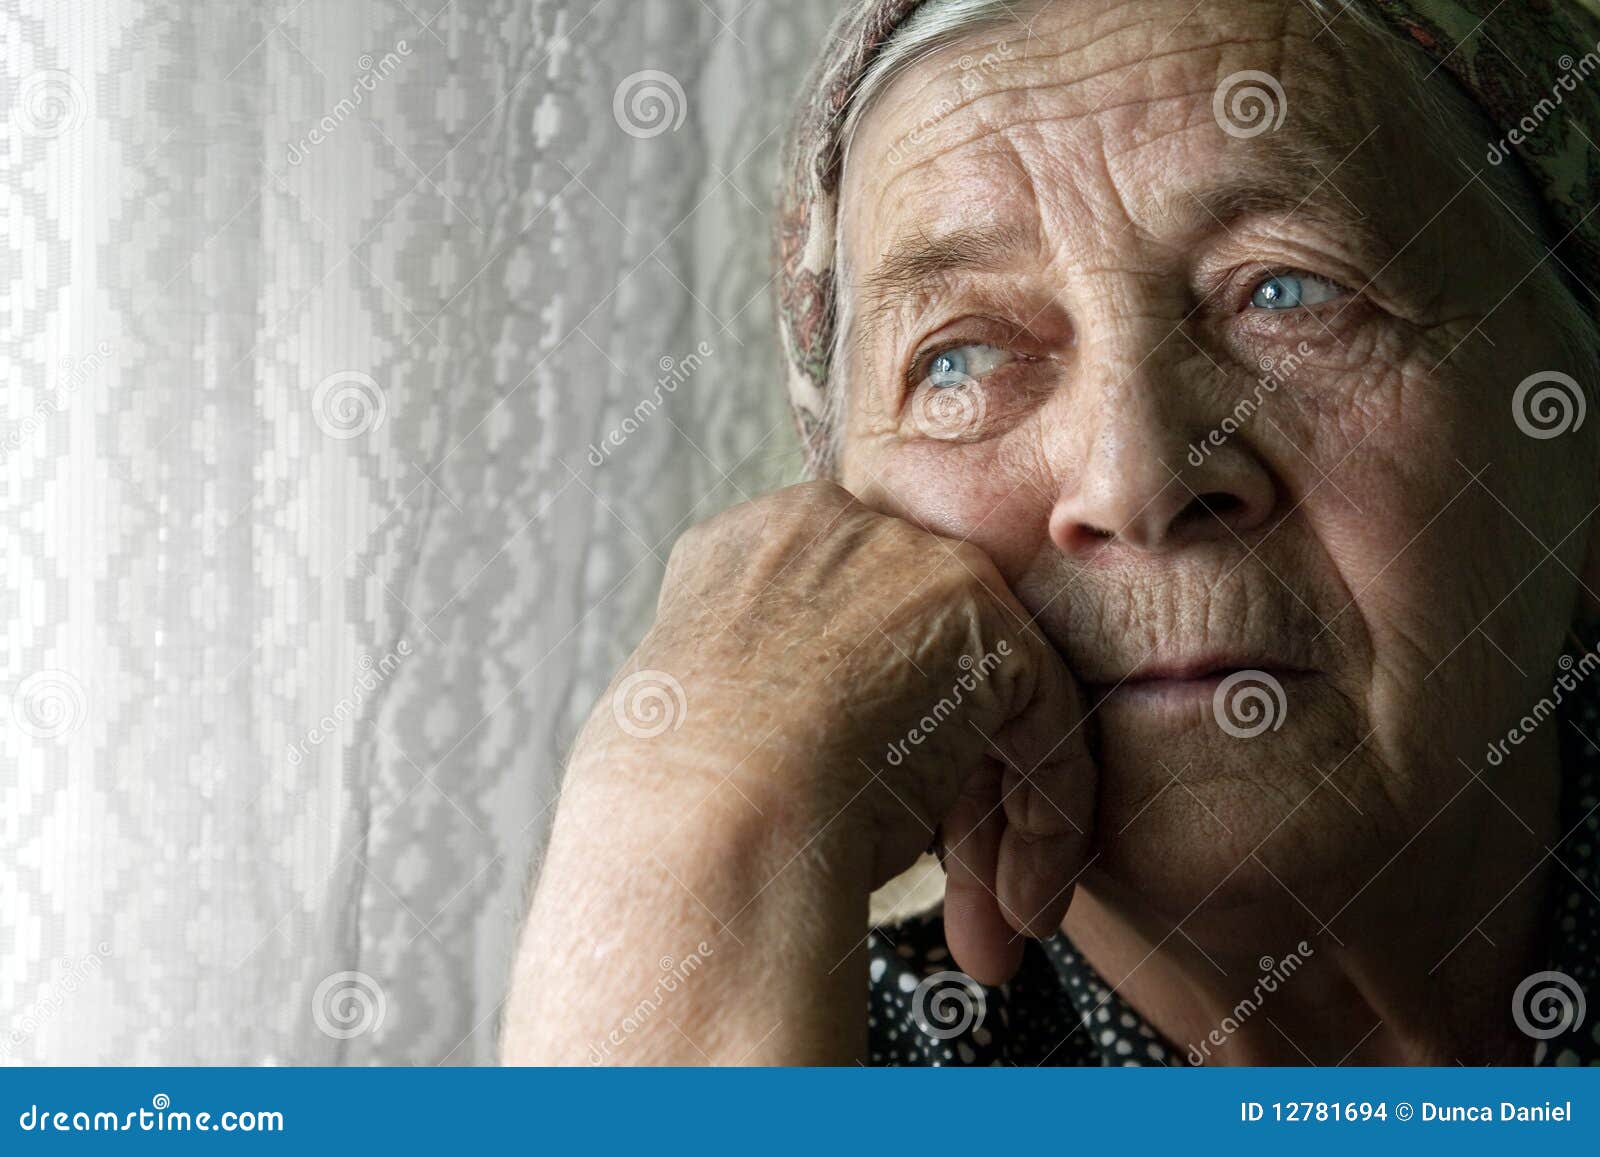 sad lonely pensive old senior woman